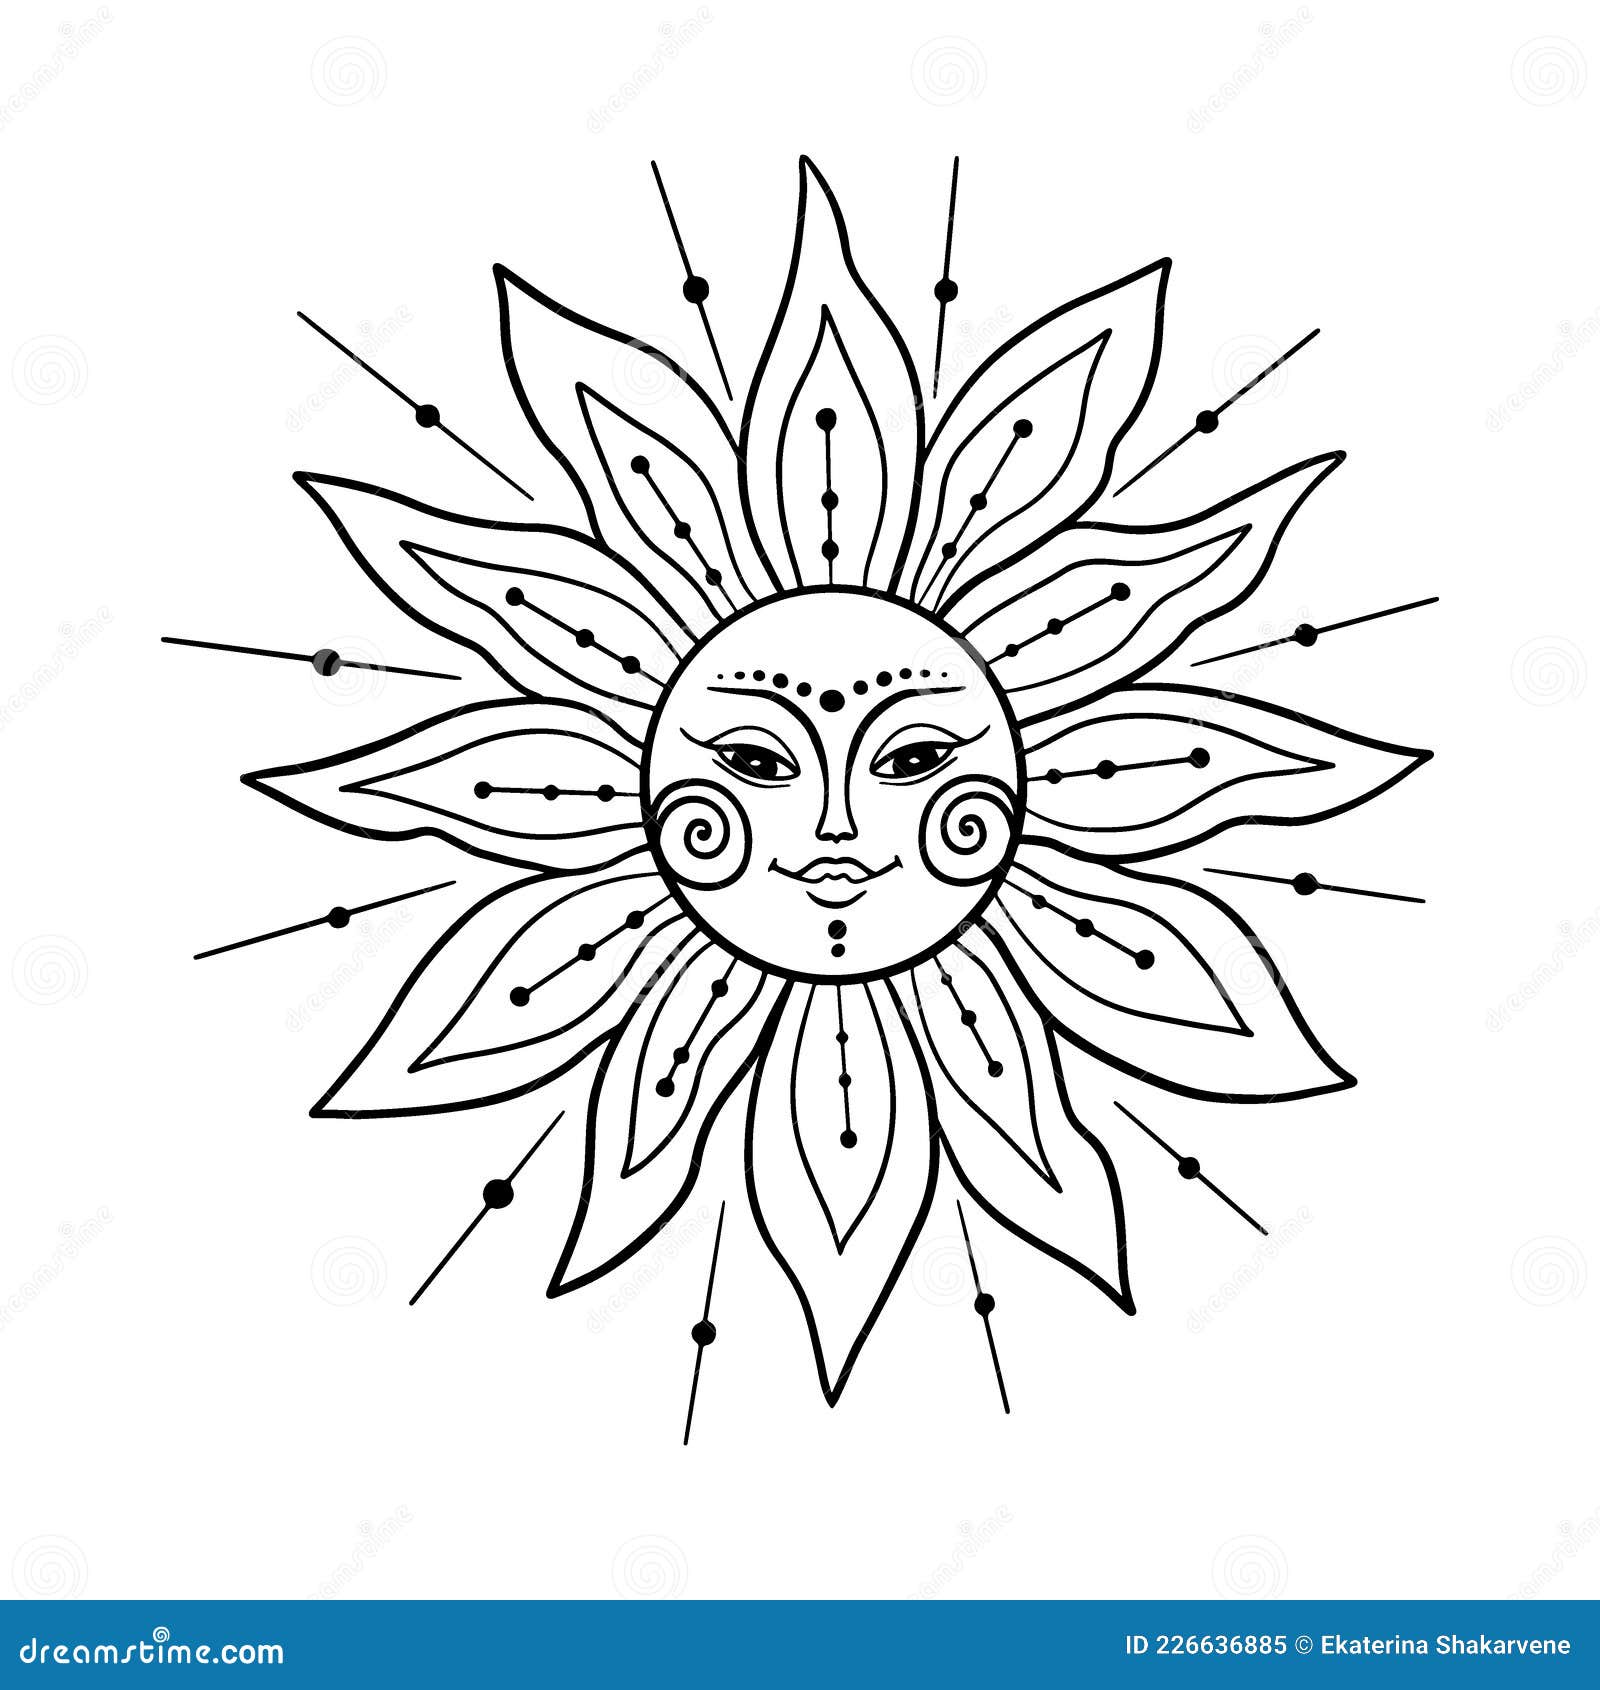 30 Amazing Sun Tattoo Designs To Brighten Your Mood  The XO Factor